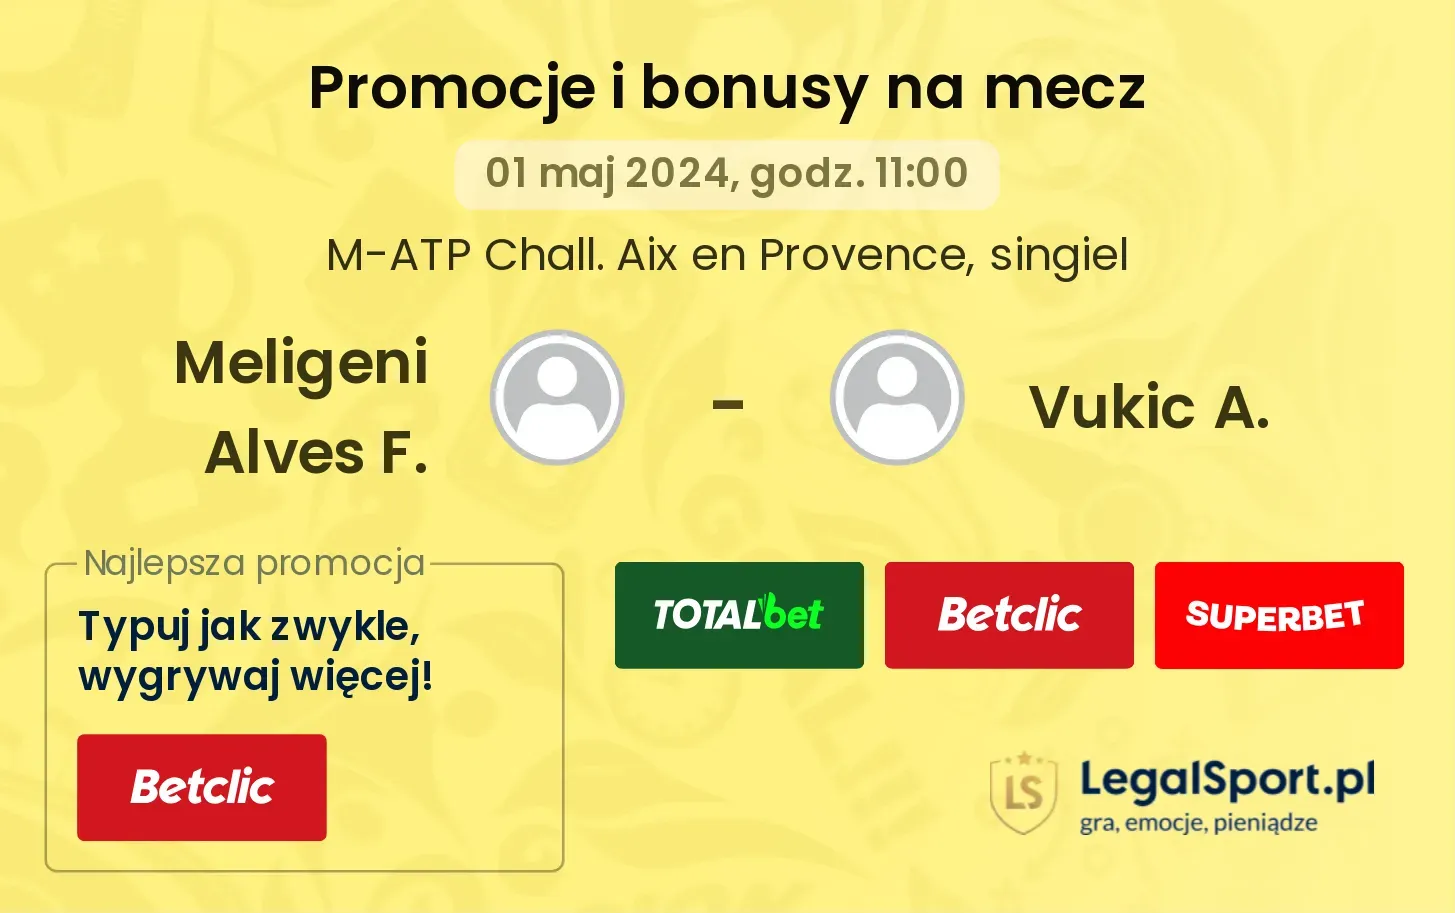 Meligeni Alves F. - Vukic A. promocje bonusy na mecz